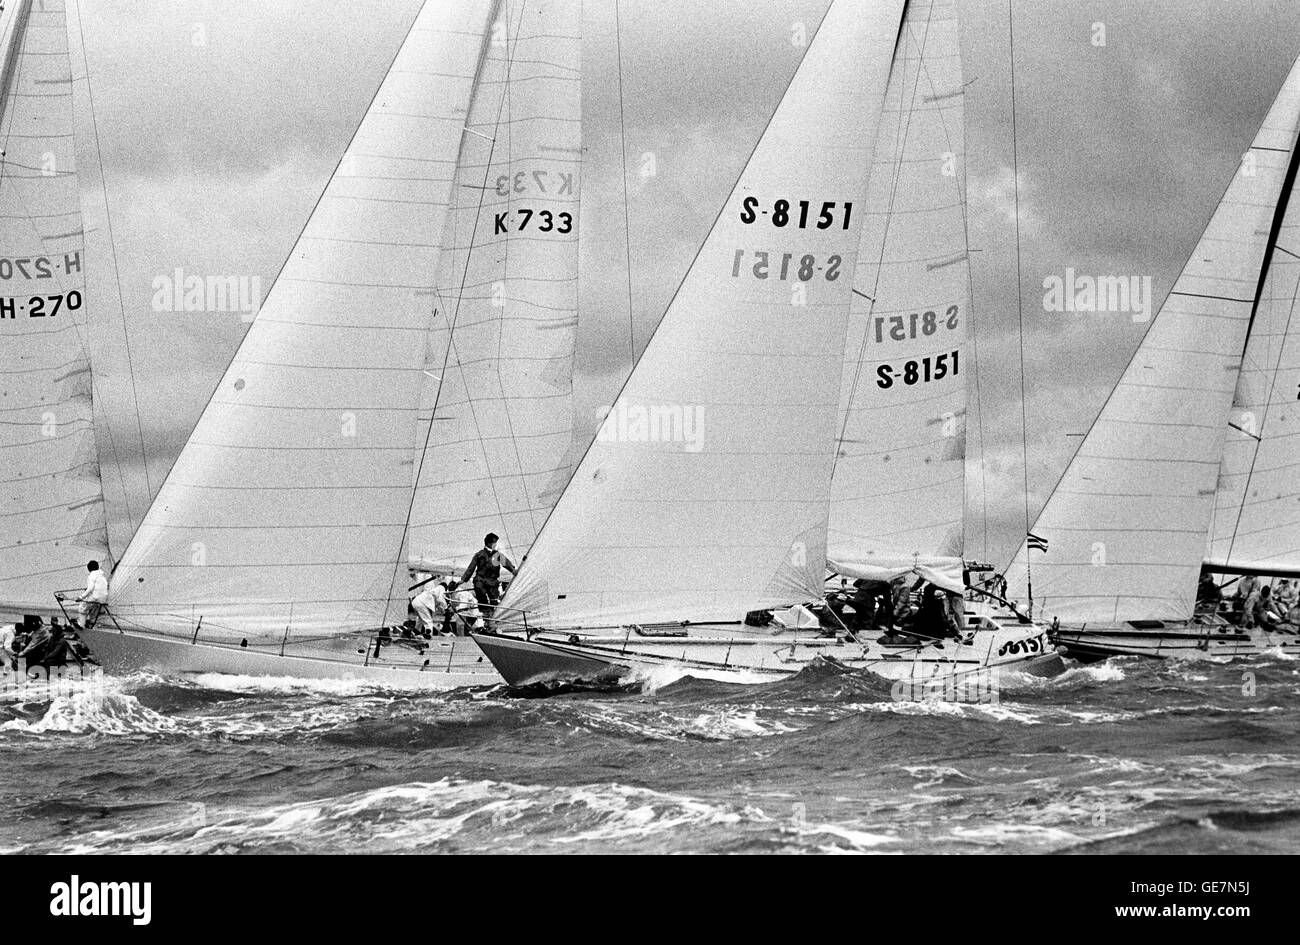 AJAXNETPHOTO. AUGUST, 1979. SOLENT, ENGLAND. - ADMIRAL'S CUP - START 2ND INSHORE RACE - (L-R) FORMIDABLE (NETH), BLIZZARD (GBR), BIG SHADOW (SW), ARIES (USA).  PHOTO:JONATHAN EASTLAND/AJAX REF:()YAR ADMIRALS CUP FLEET 1 1979 Stock Photo